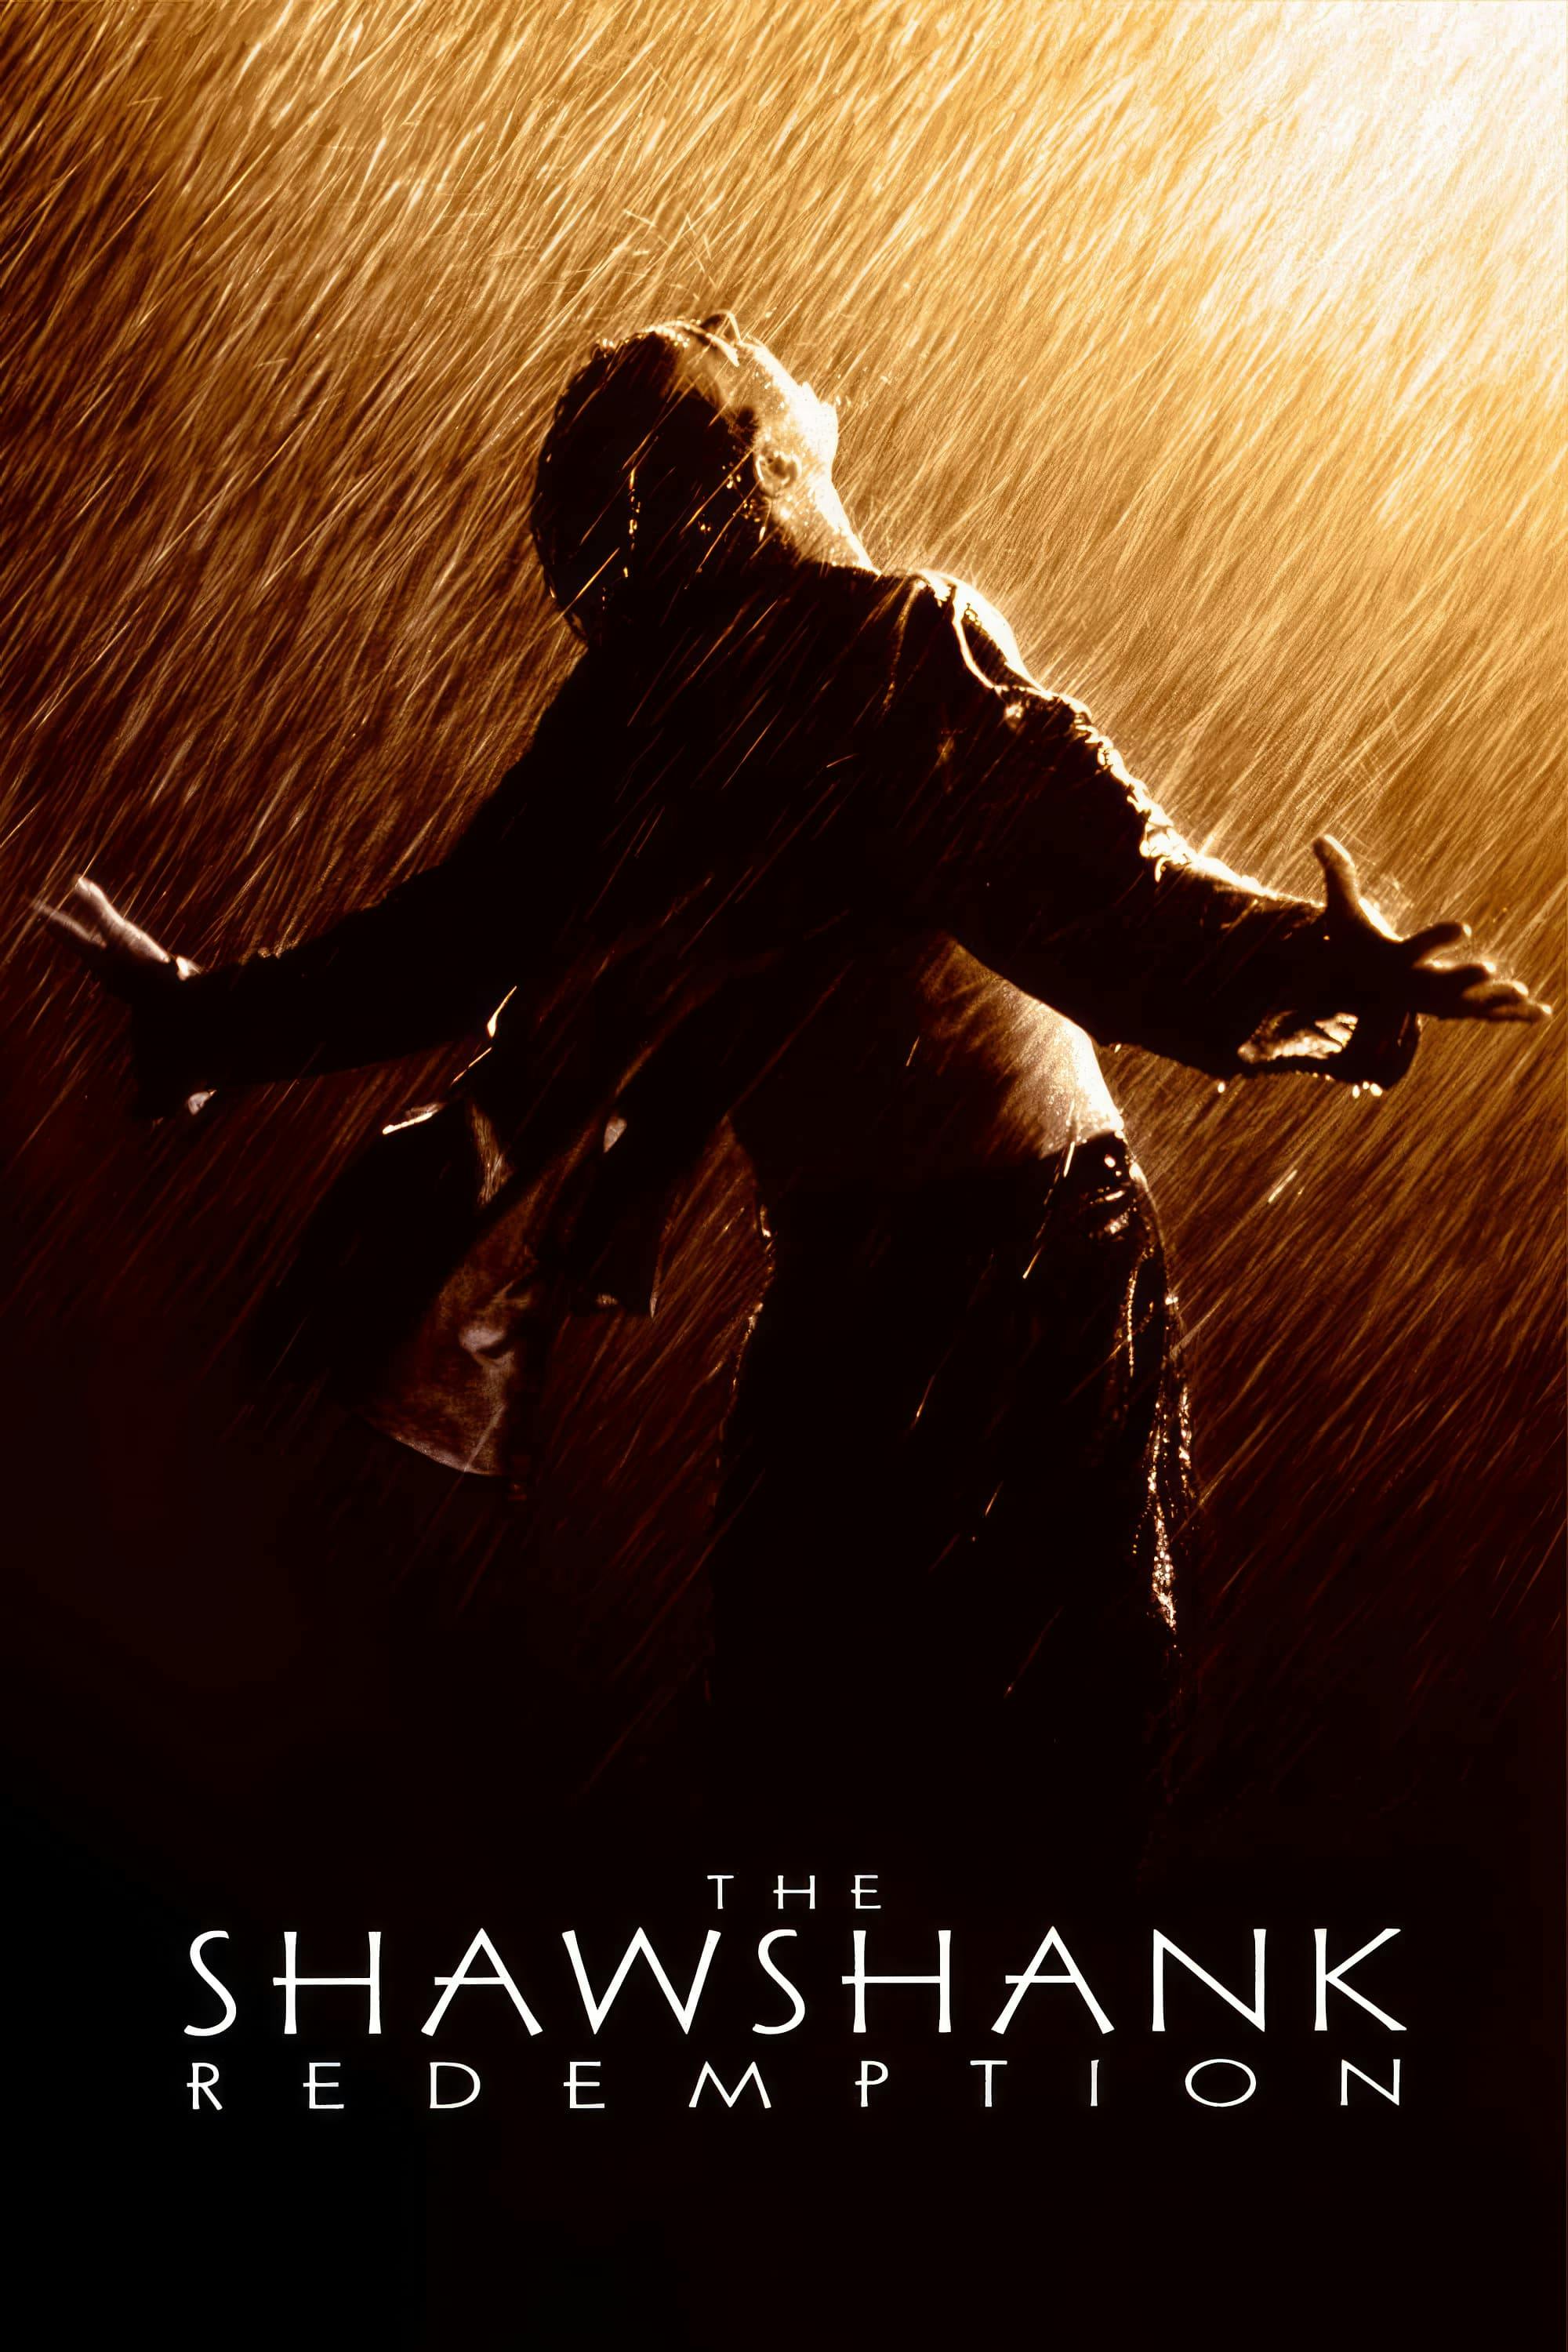 Movie poster of "The Shawshank Redemption"